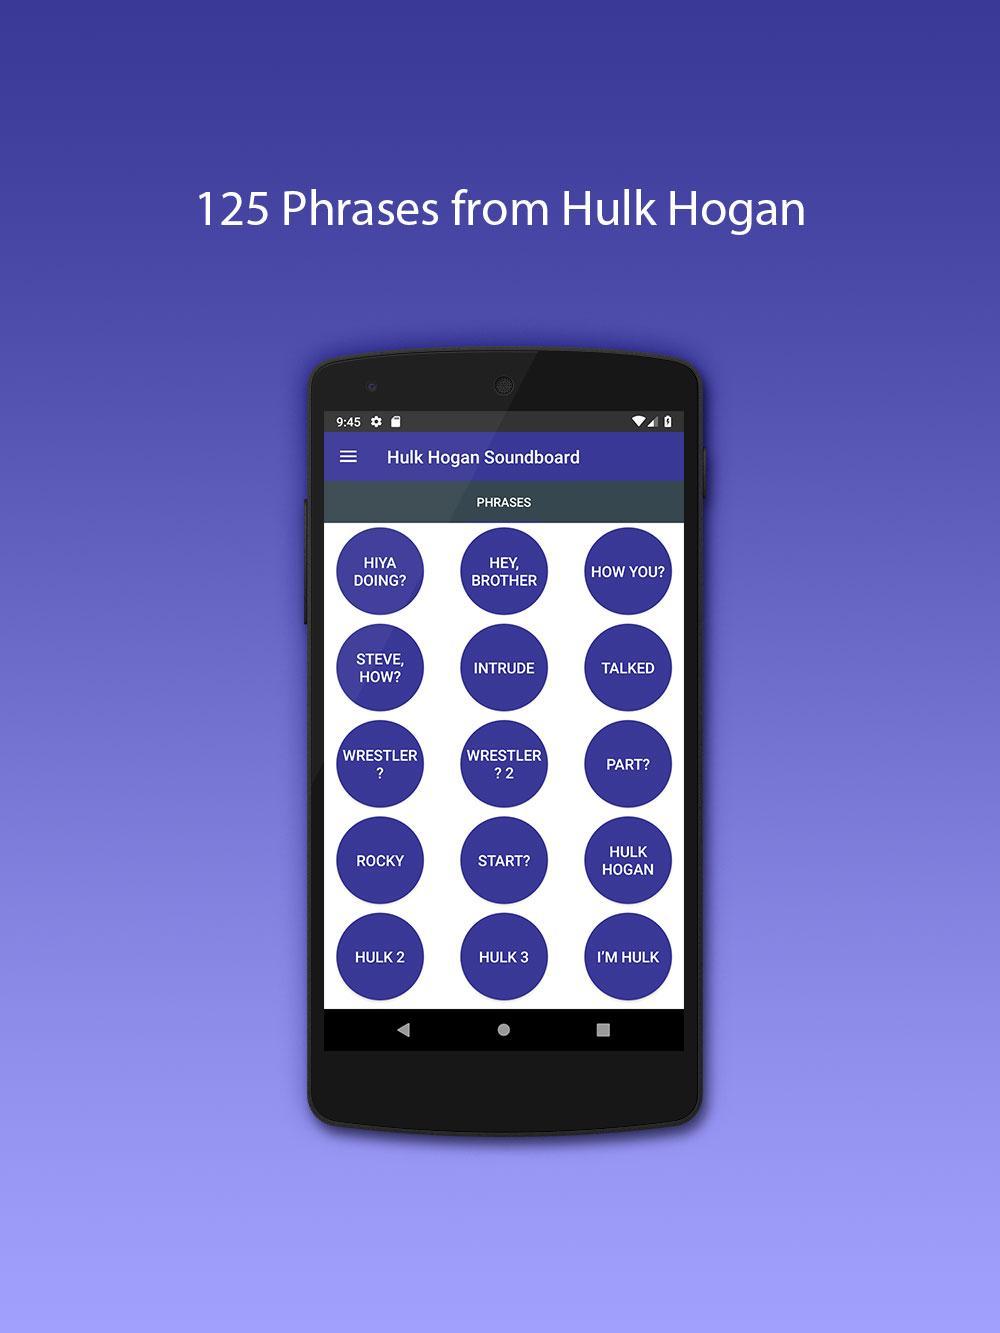 Hulk Hogan Soundboard For Android Apk Download - roblox hulk hogan 2 youtube